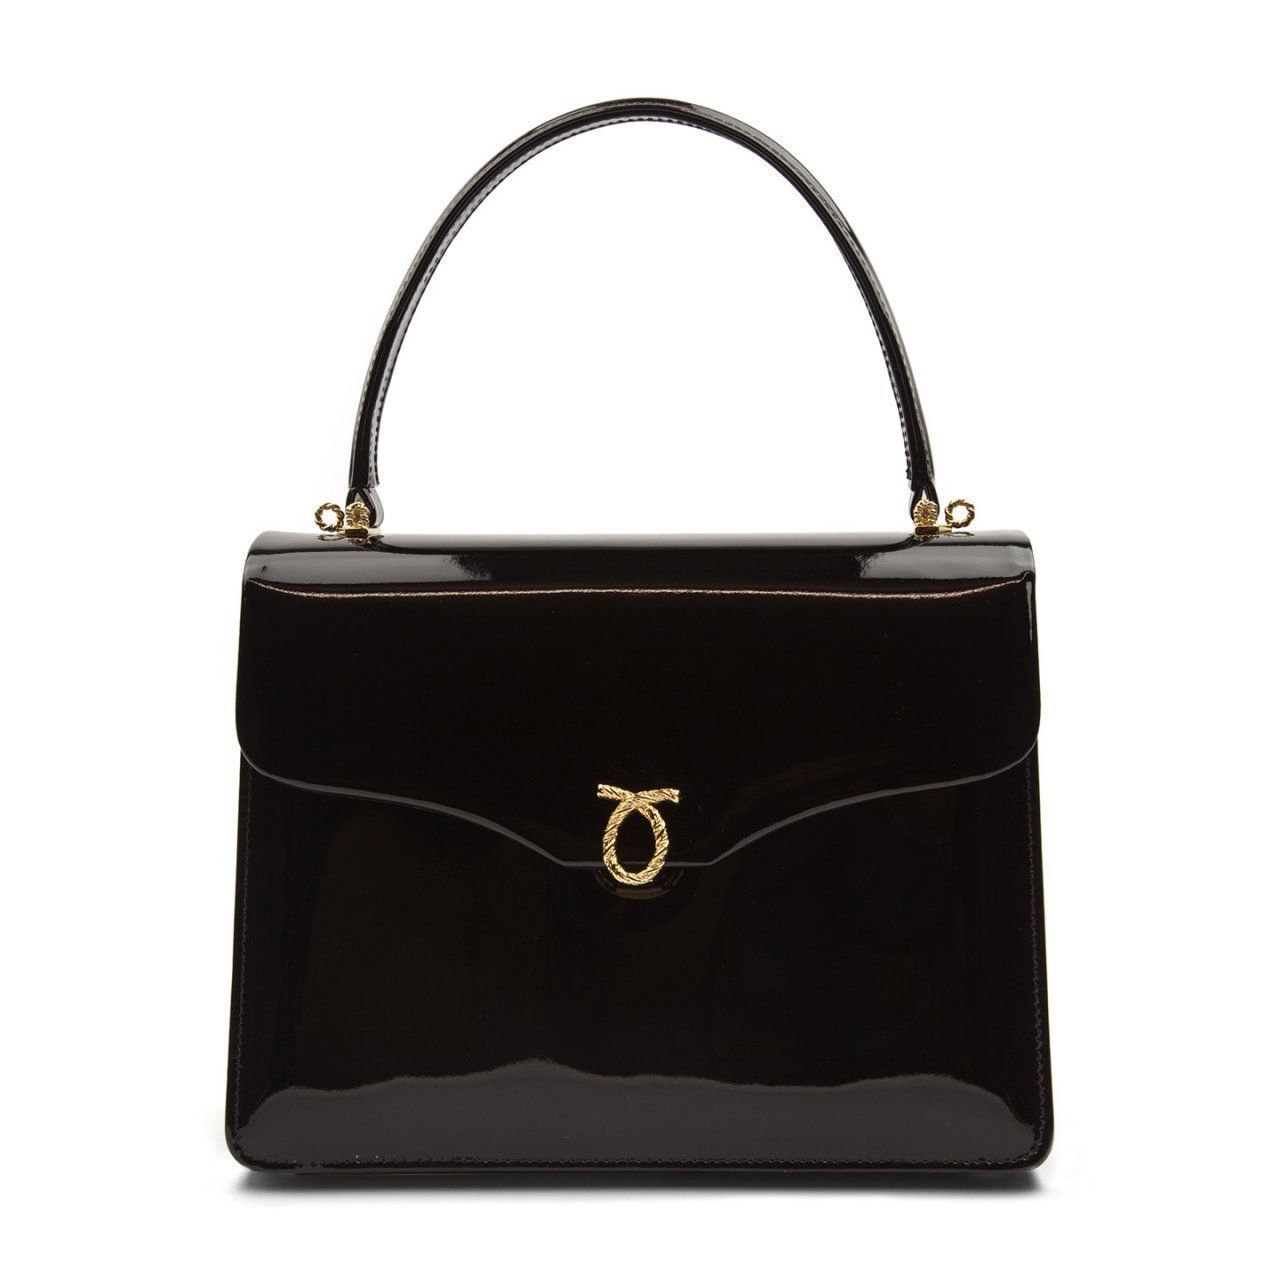 Royal Luxury Handbags  Launer London - The Simone Magazine